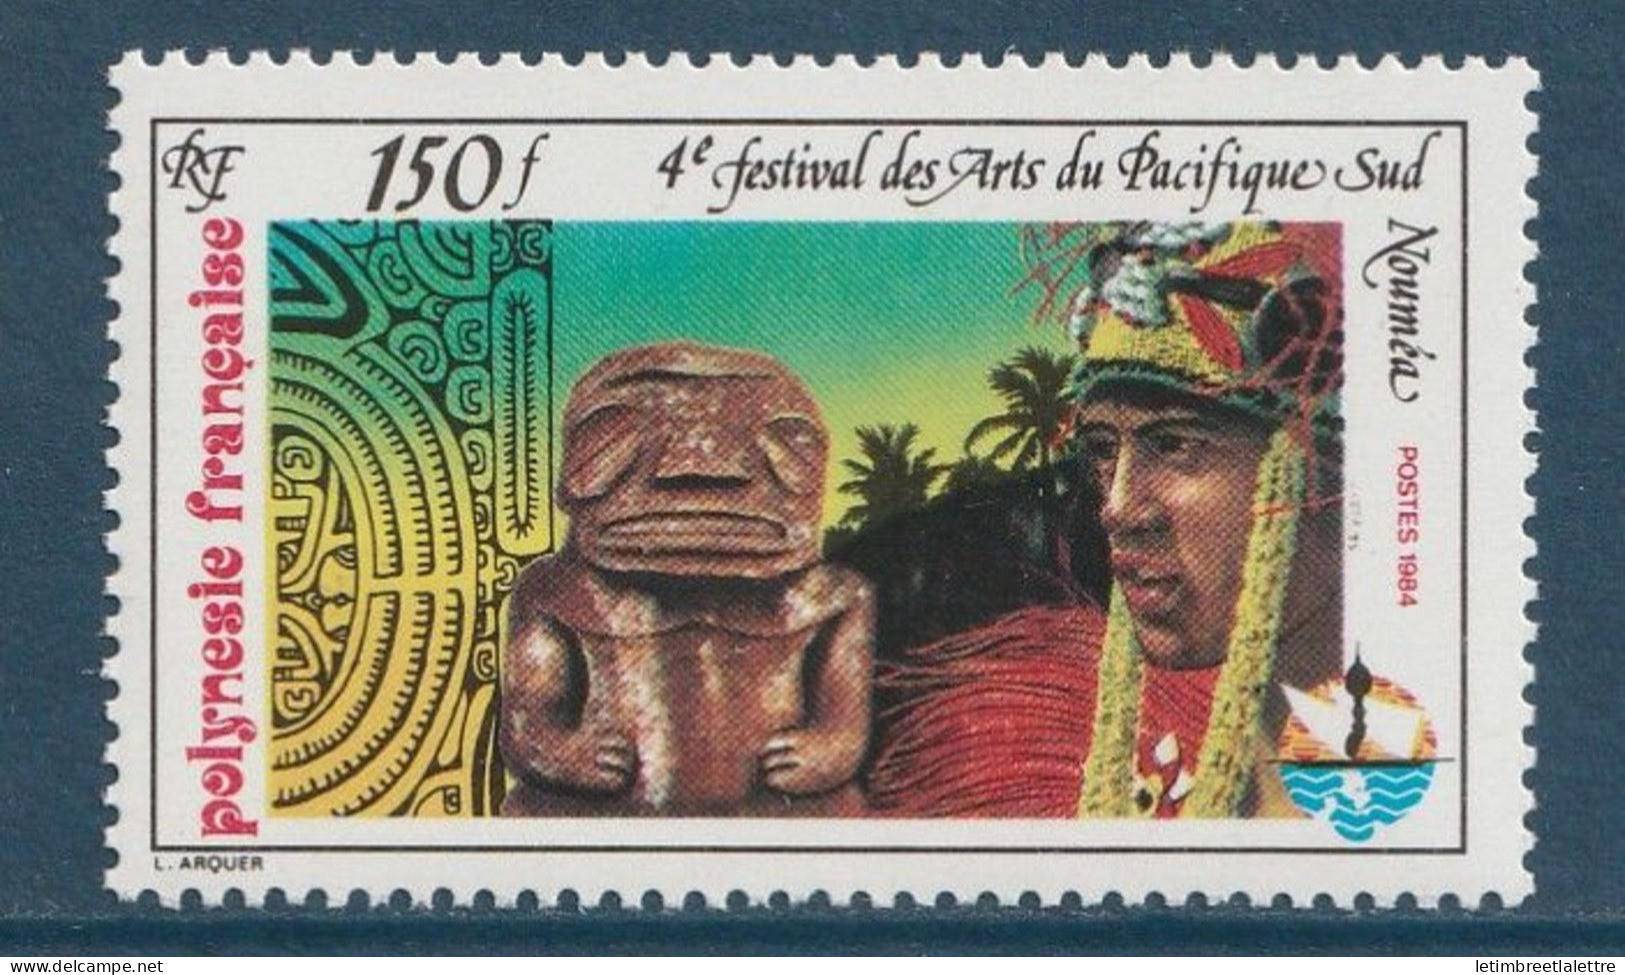 Polynésie Française - YT N° 222 ** - Neuf Sans Charnière - 1984 - Unused Stamps